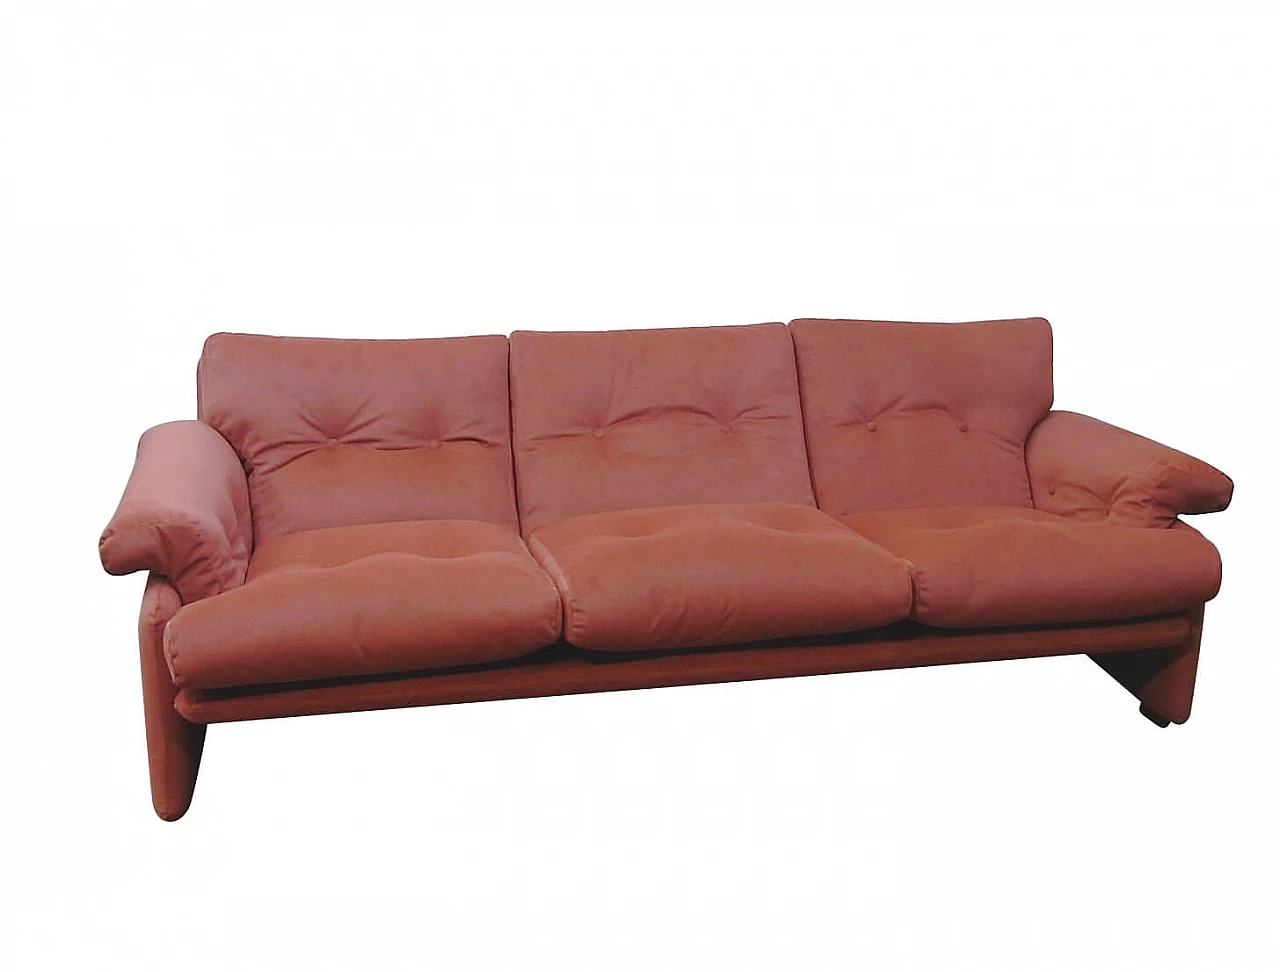 Coronado sofa by Tobia Scarpa for B&B Italia, 1960s 1212430